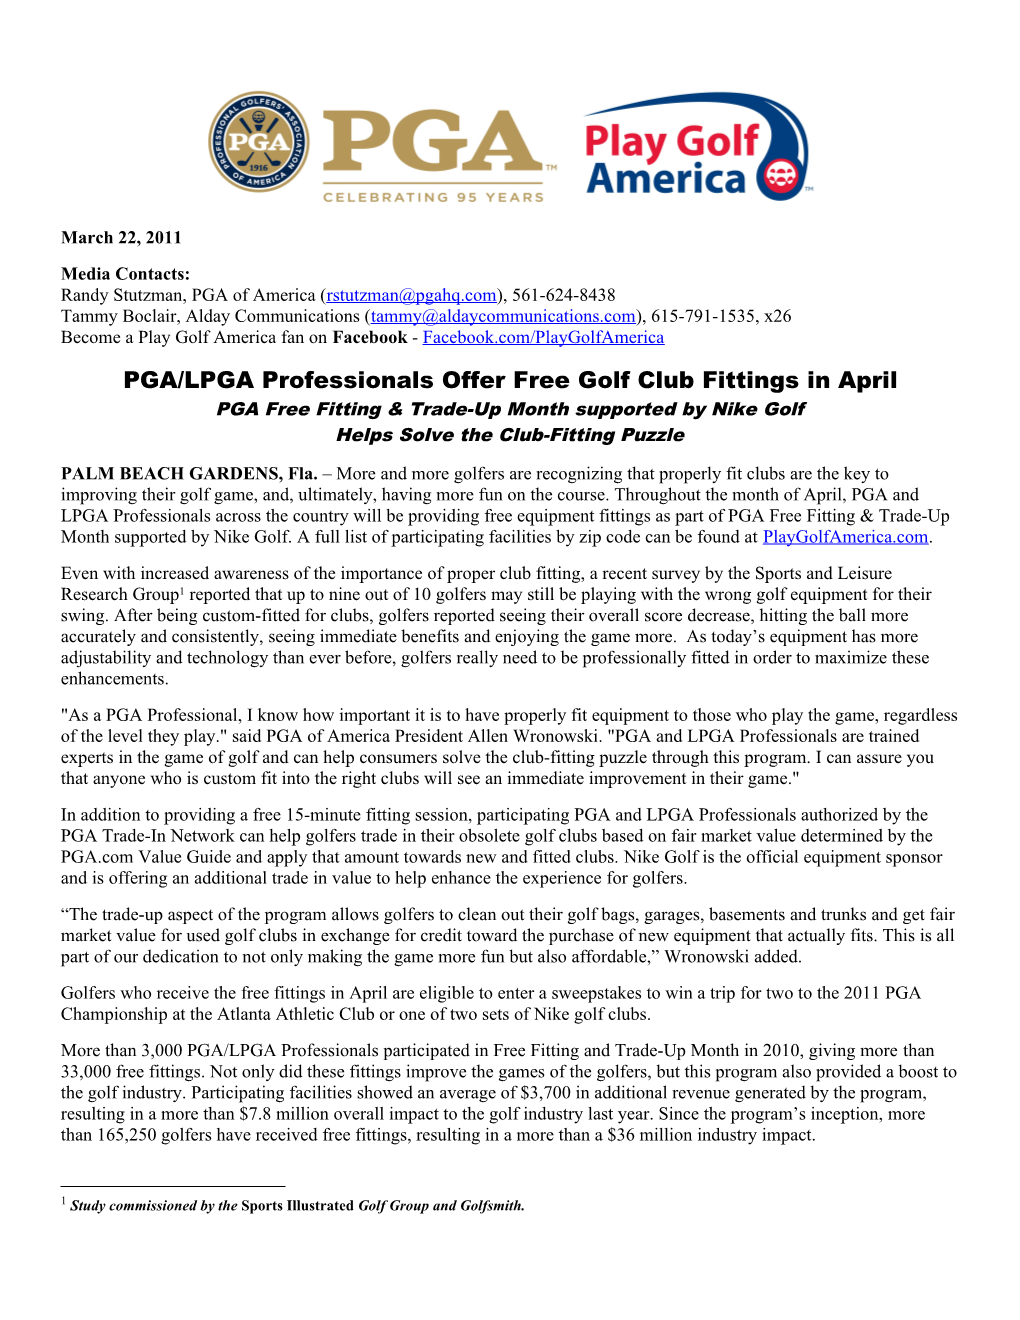 PGA Free Fitting & Trade up Month